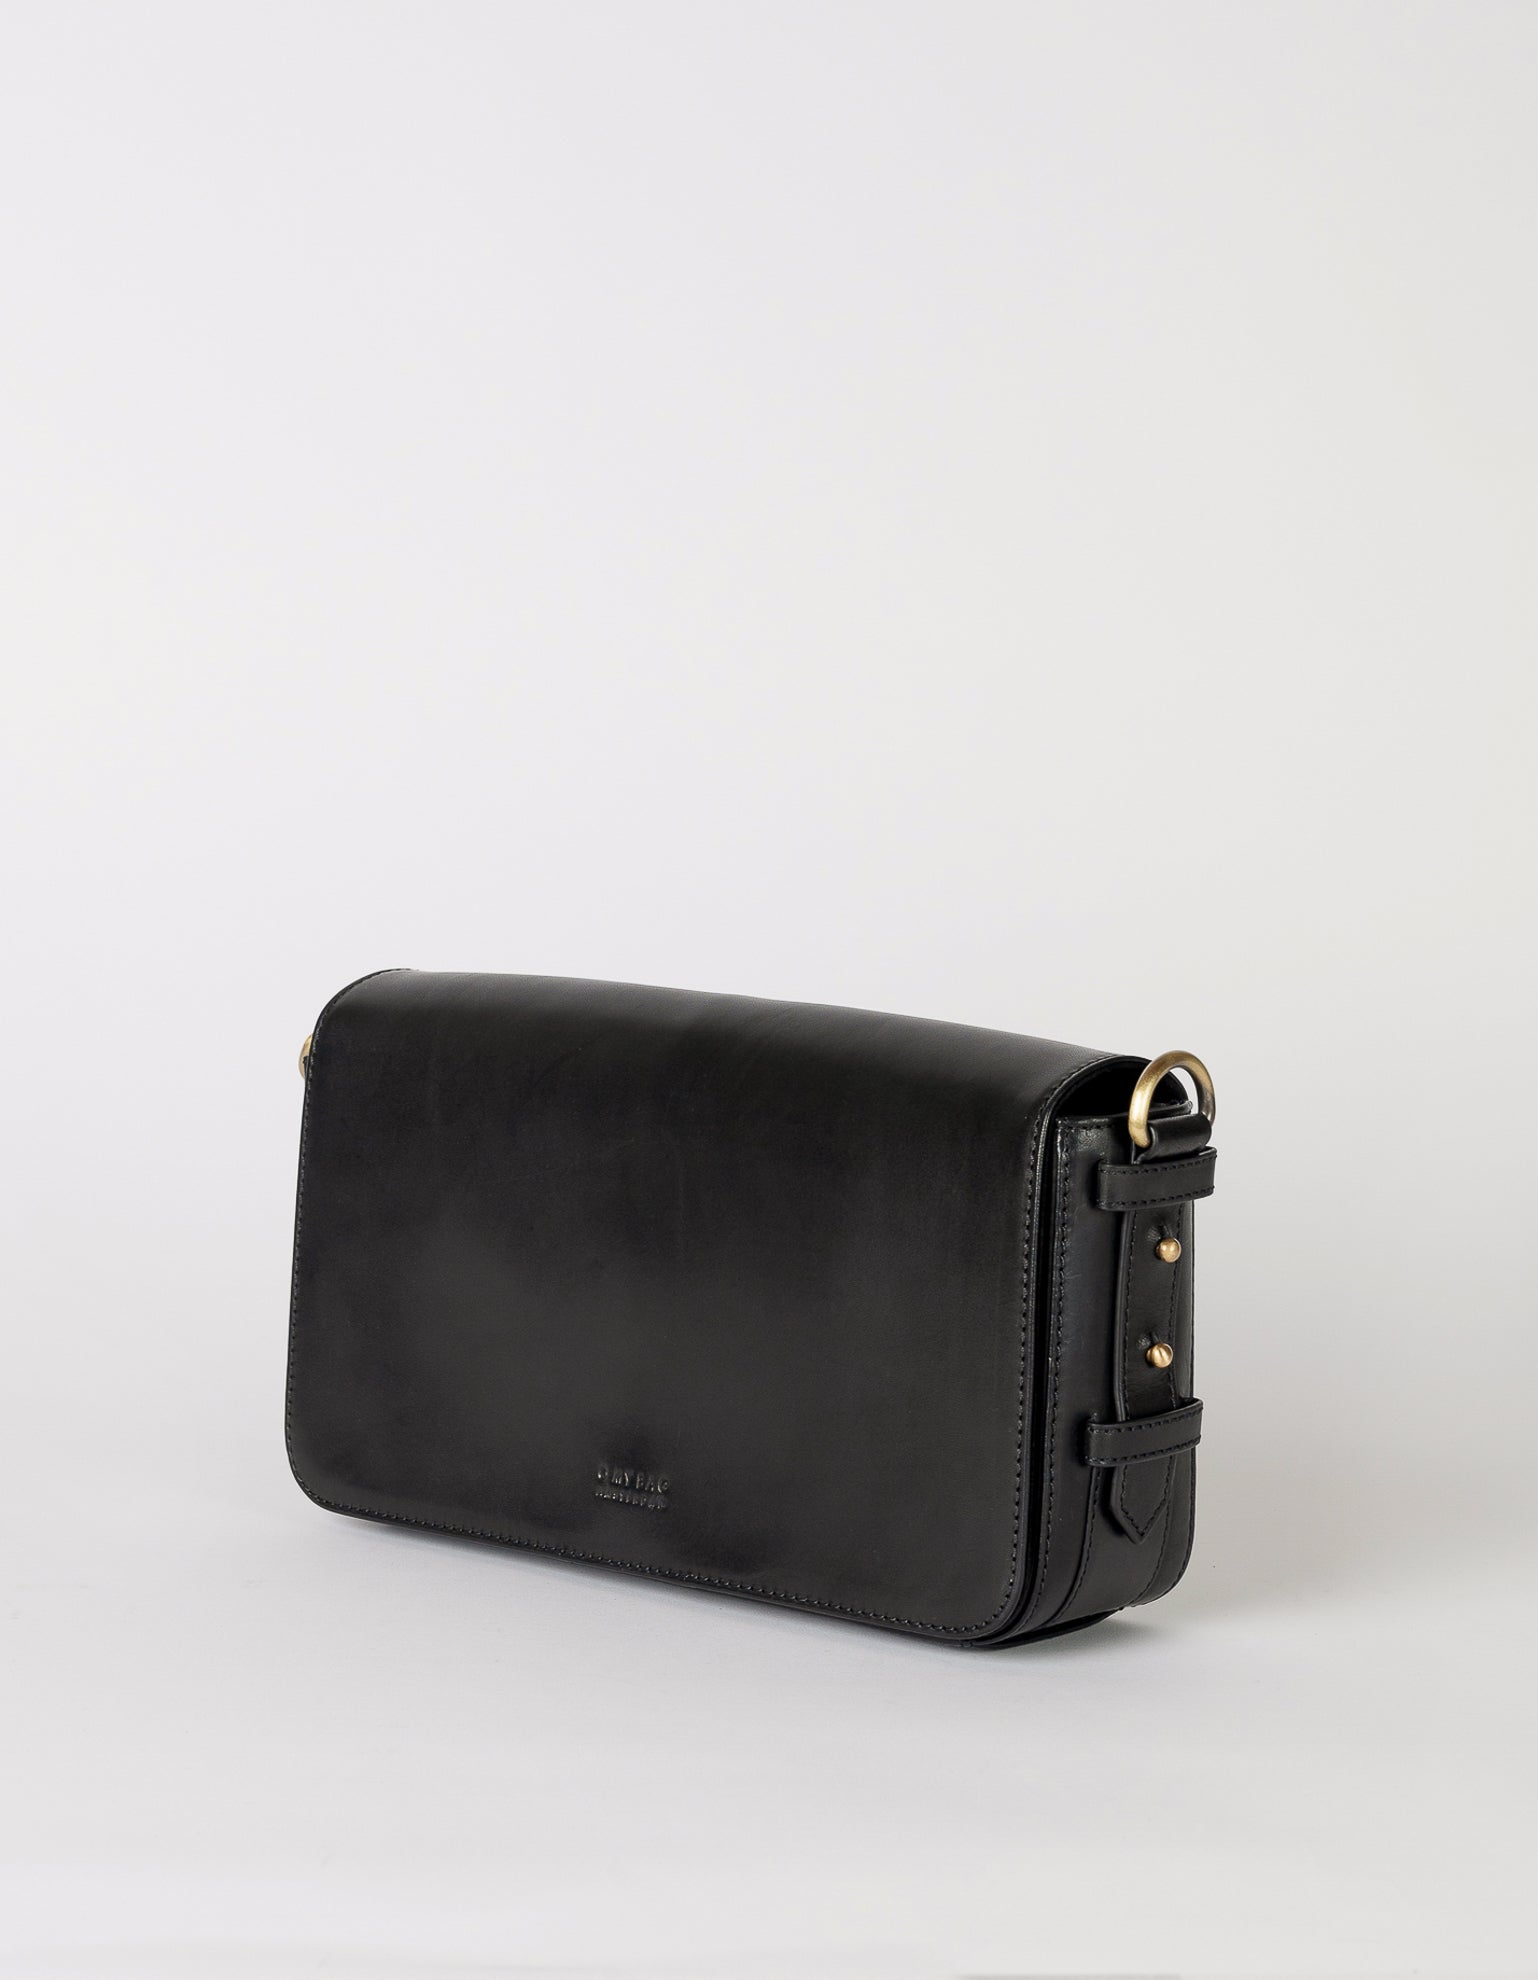 Black Baguette Leather womens handbag. Square shape with an adjustable strap. Alternative straps